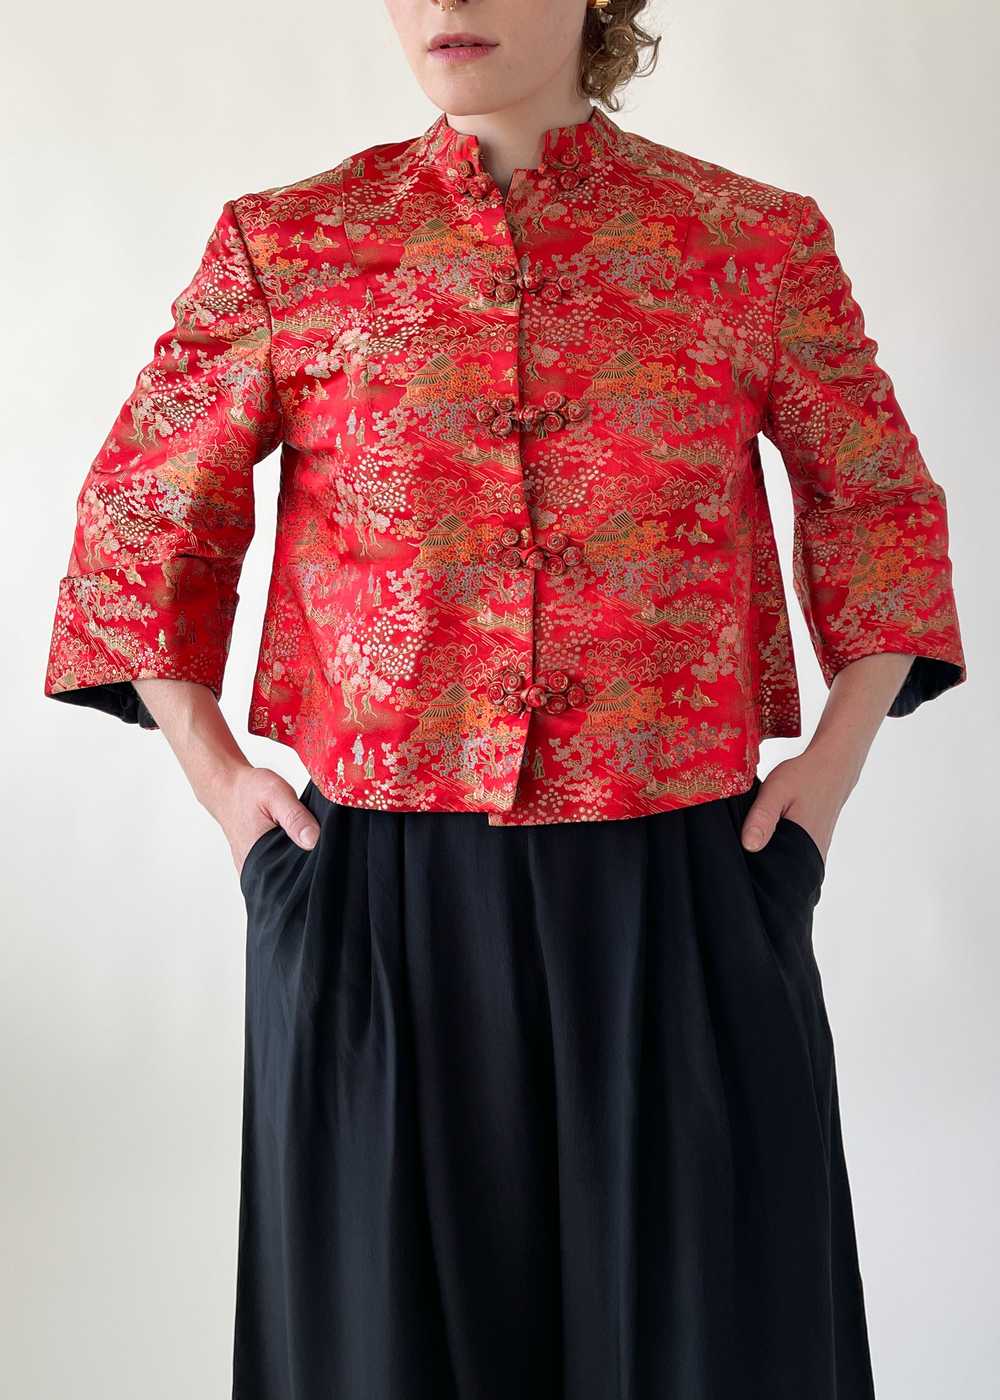 Vintage 1950s Chinese Silk Jacket - image 3